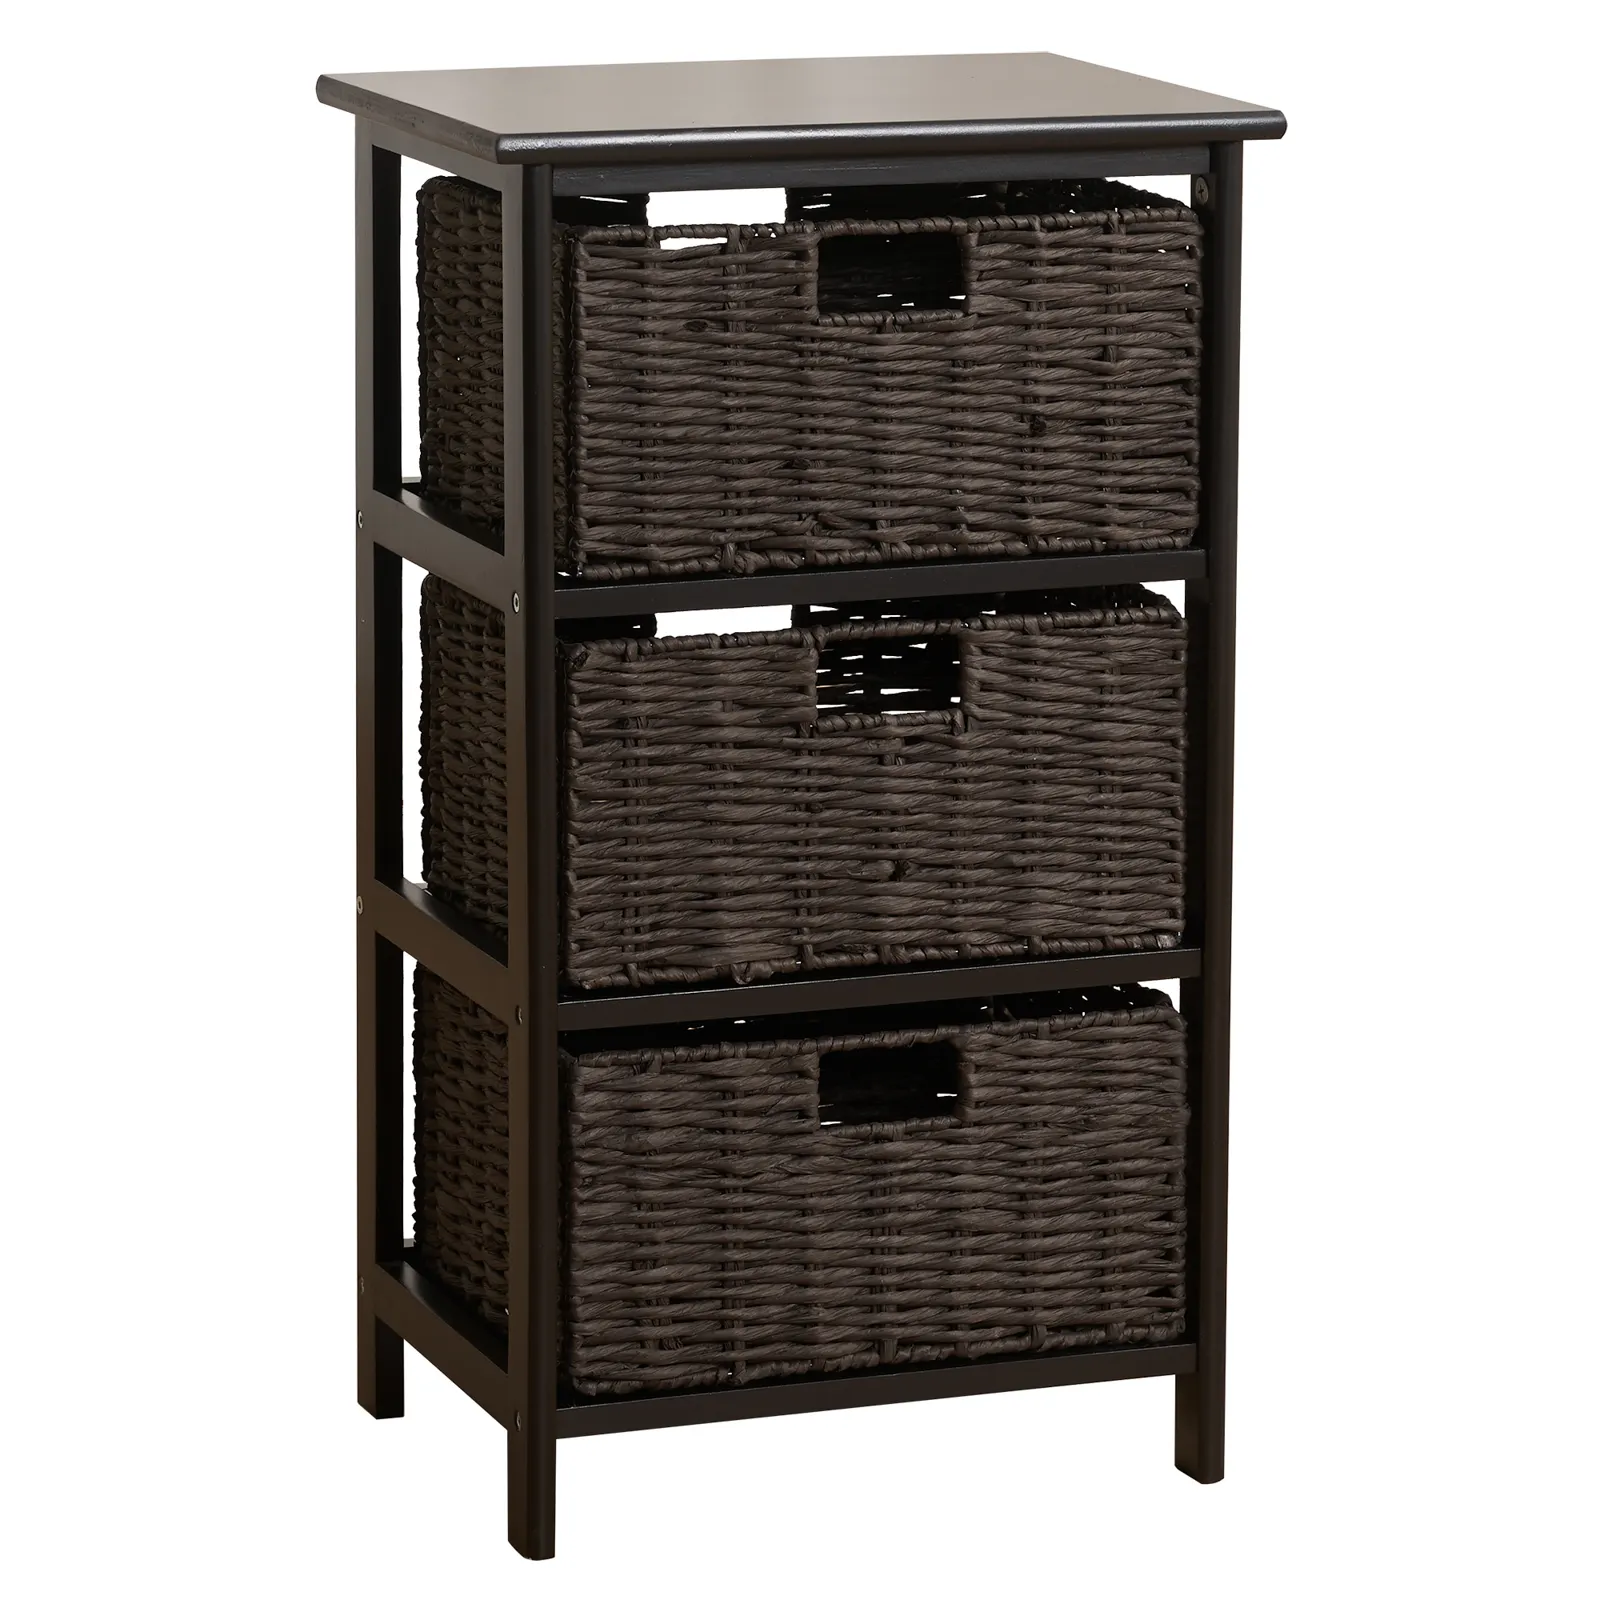 KD storage cabinet black color cabinet with drawers Living Room Furniture